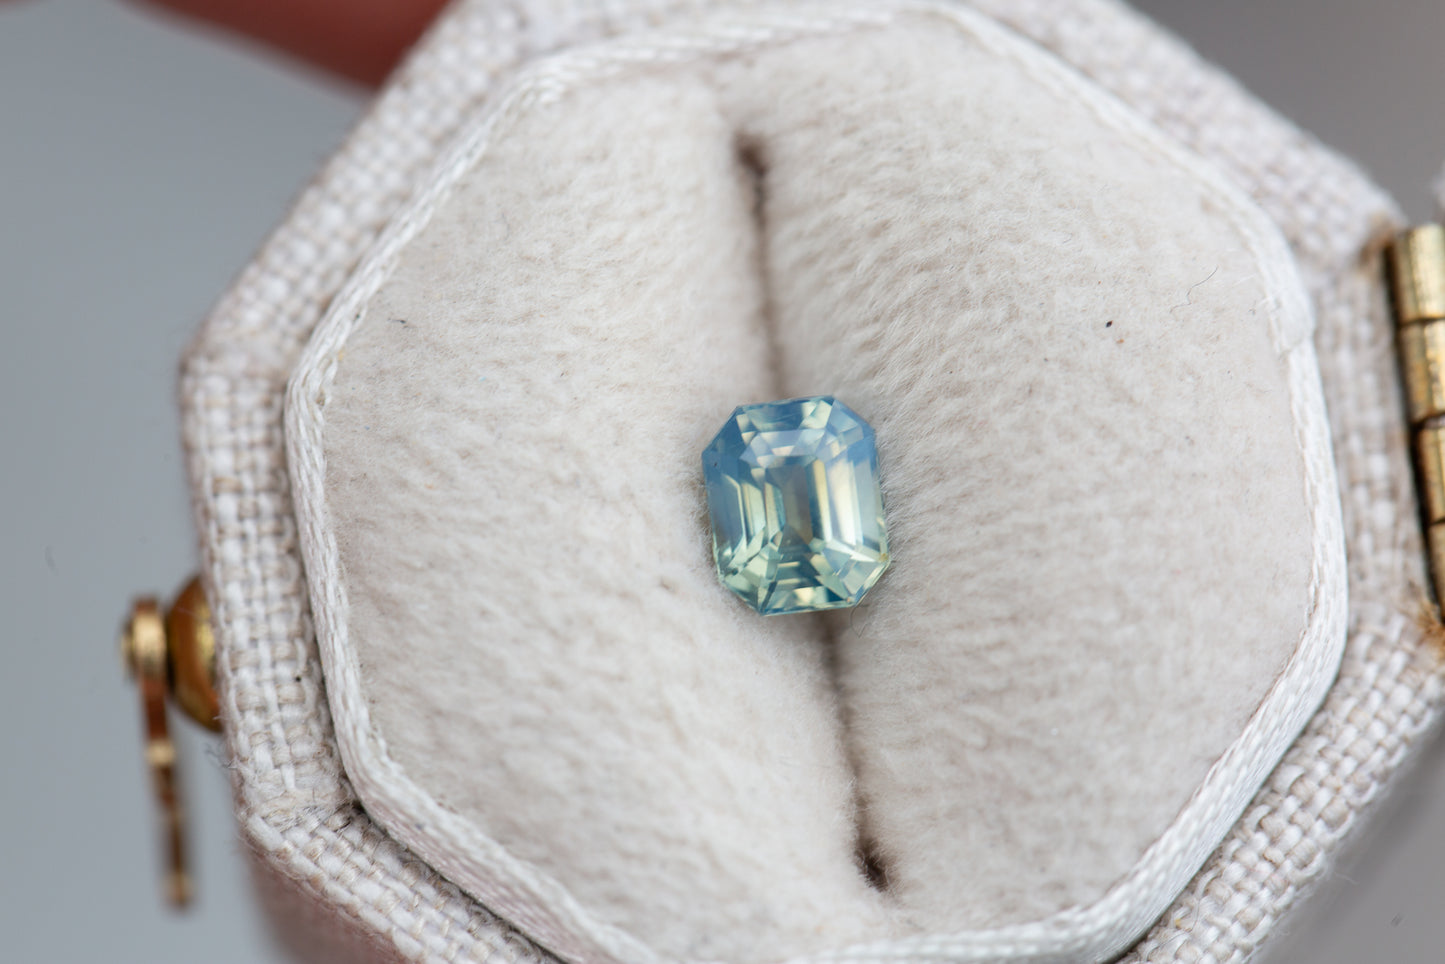 .7ct emerald cut opalescent teal sapphire